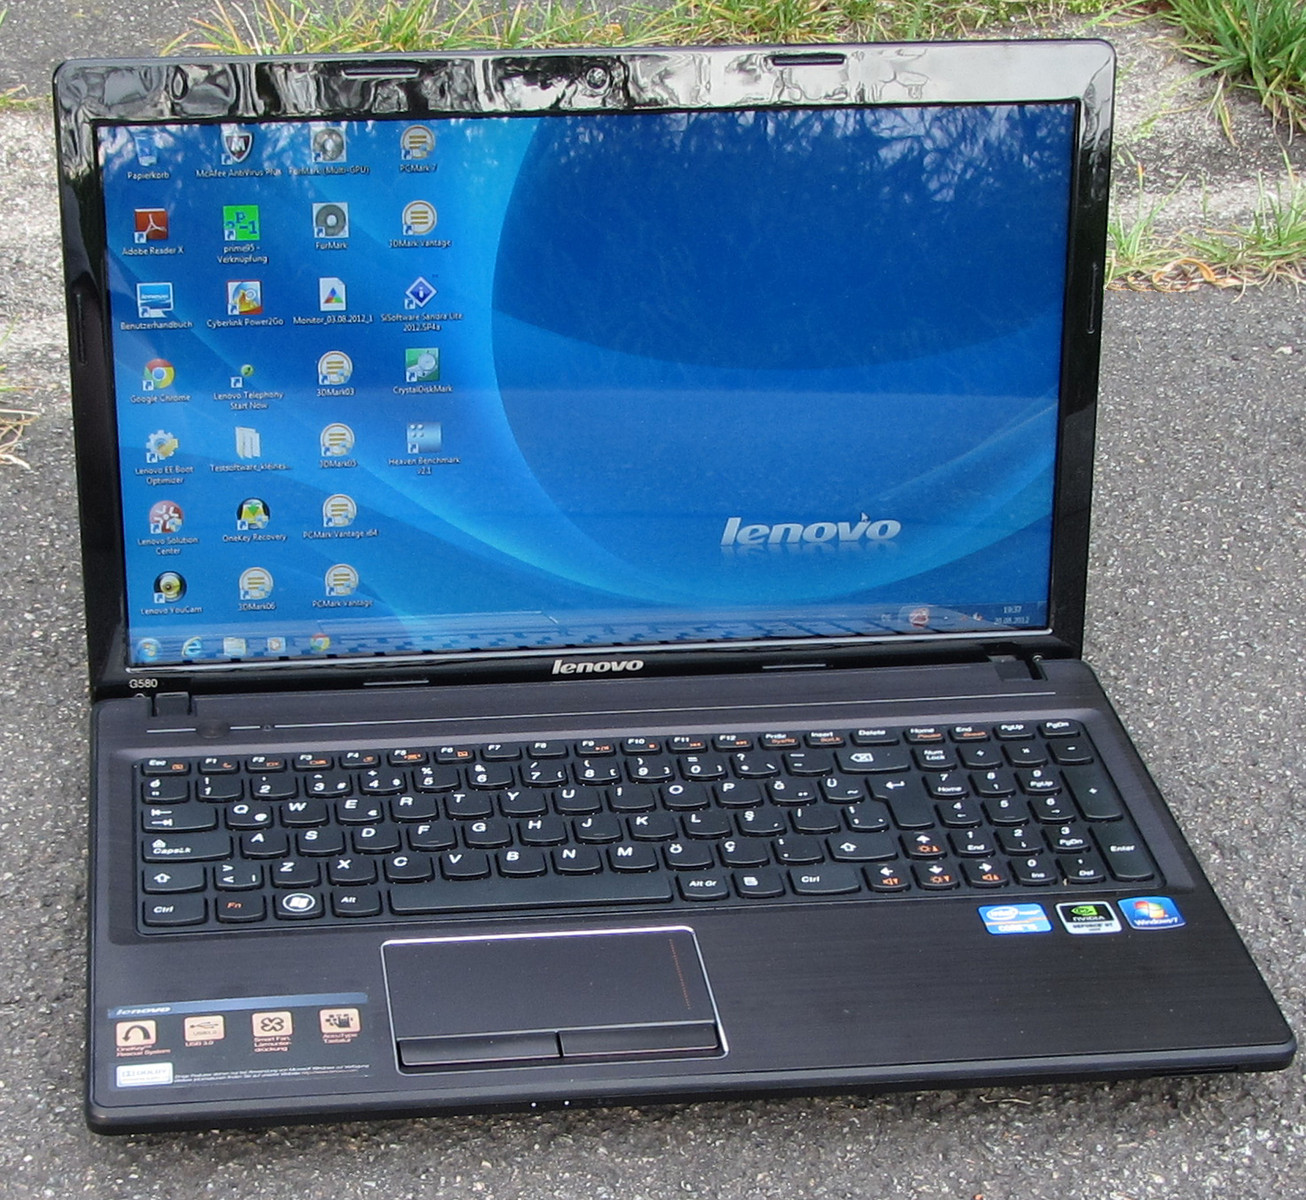 Test Lenovo Ideapad G580 Notebook Notebookcheck Com Tests